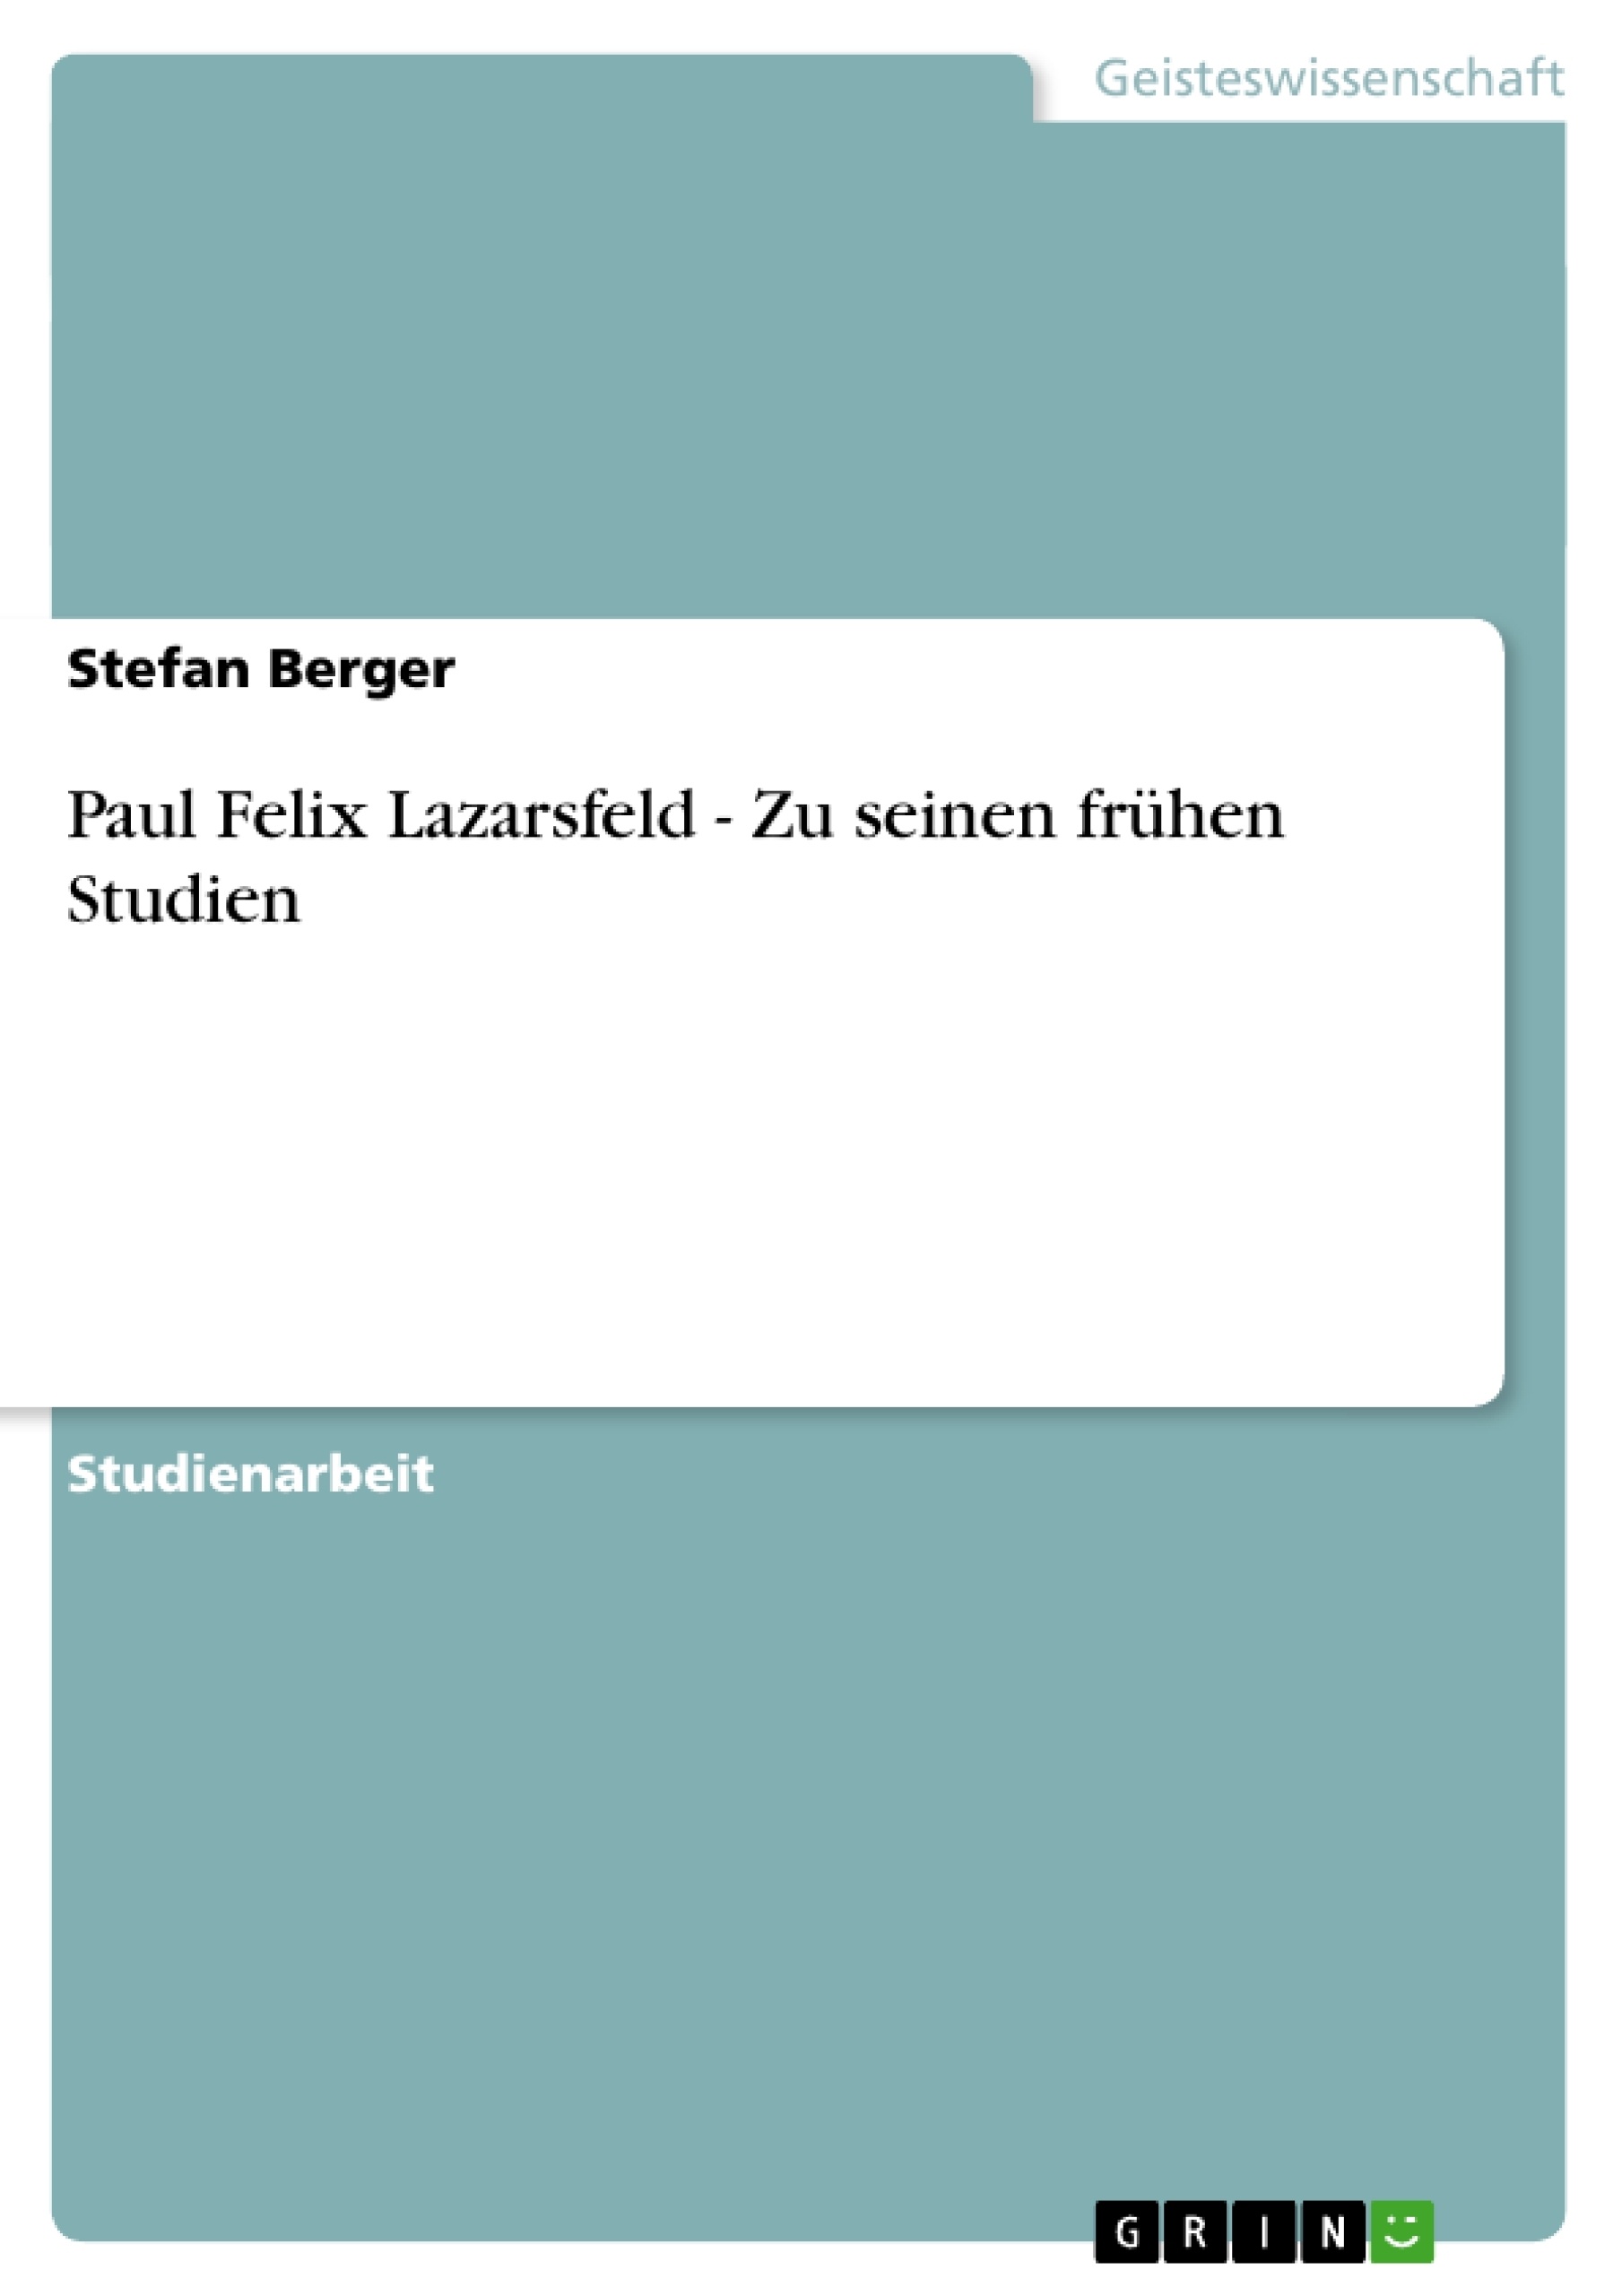 Título: Paul Felix Lazarsfeld - Zu seinen frühen Studien